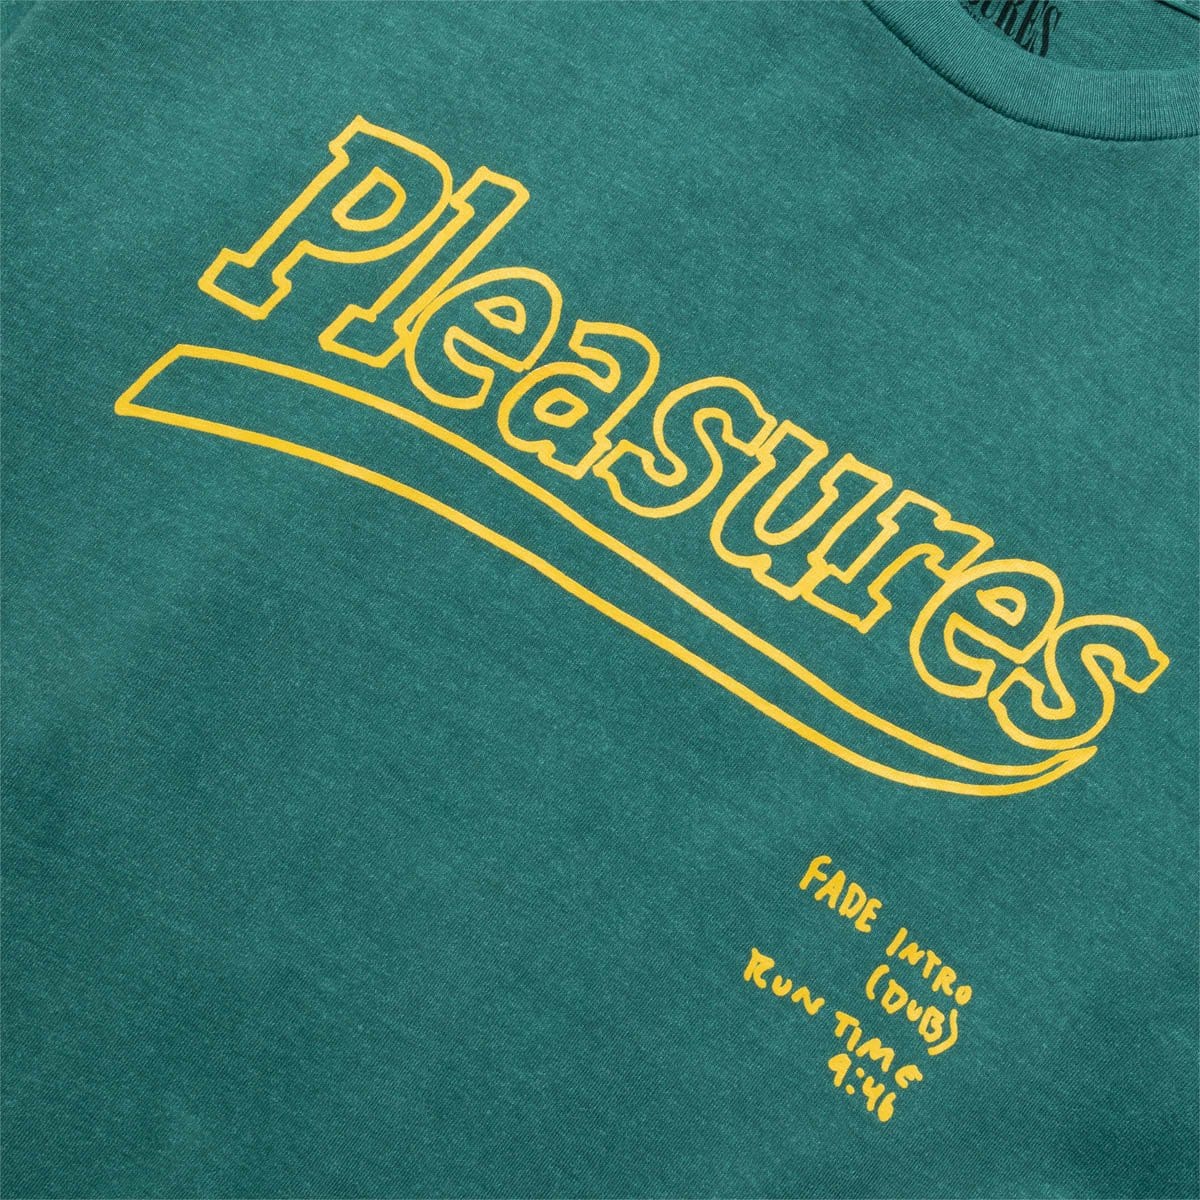 Pleasures T-Shirts DUB PIGMENT DYE T-SHIRT